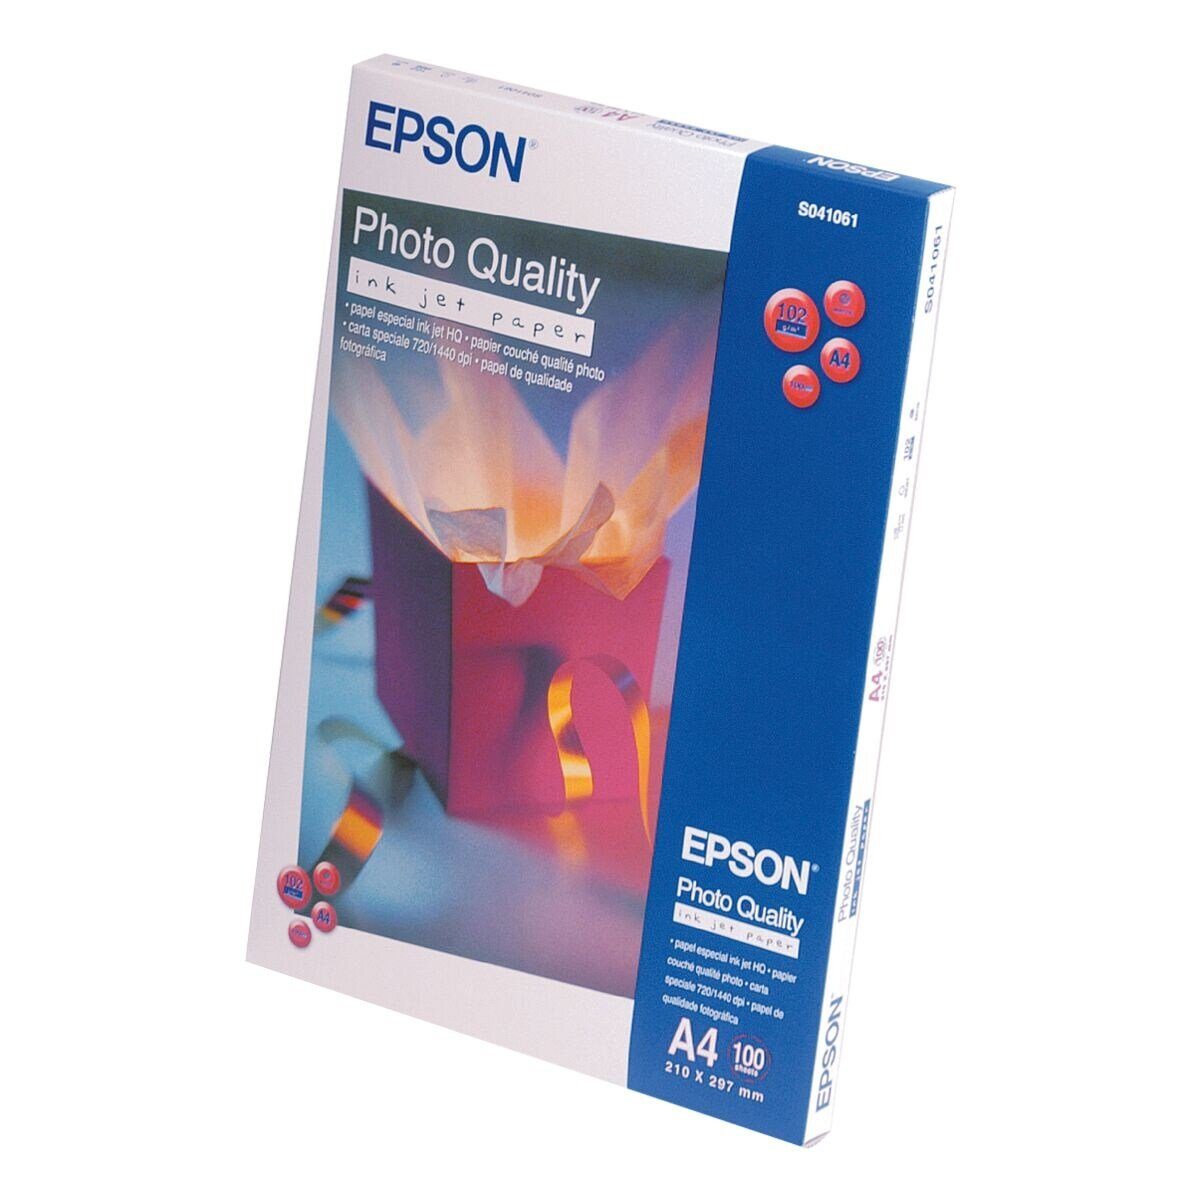 Epson Fotopapier Photo Quality Inkjet, Format A4, matt, 102 g/m², 100 Blatt